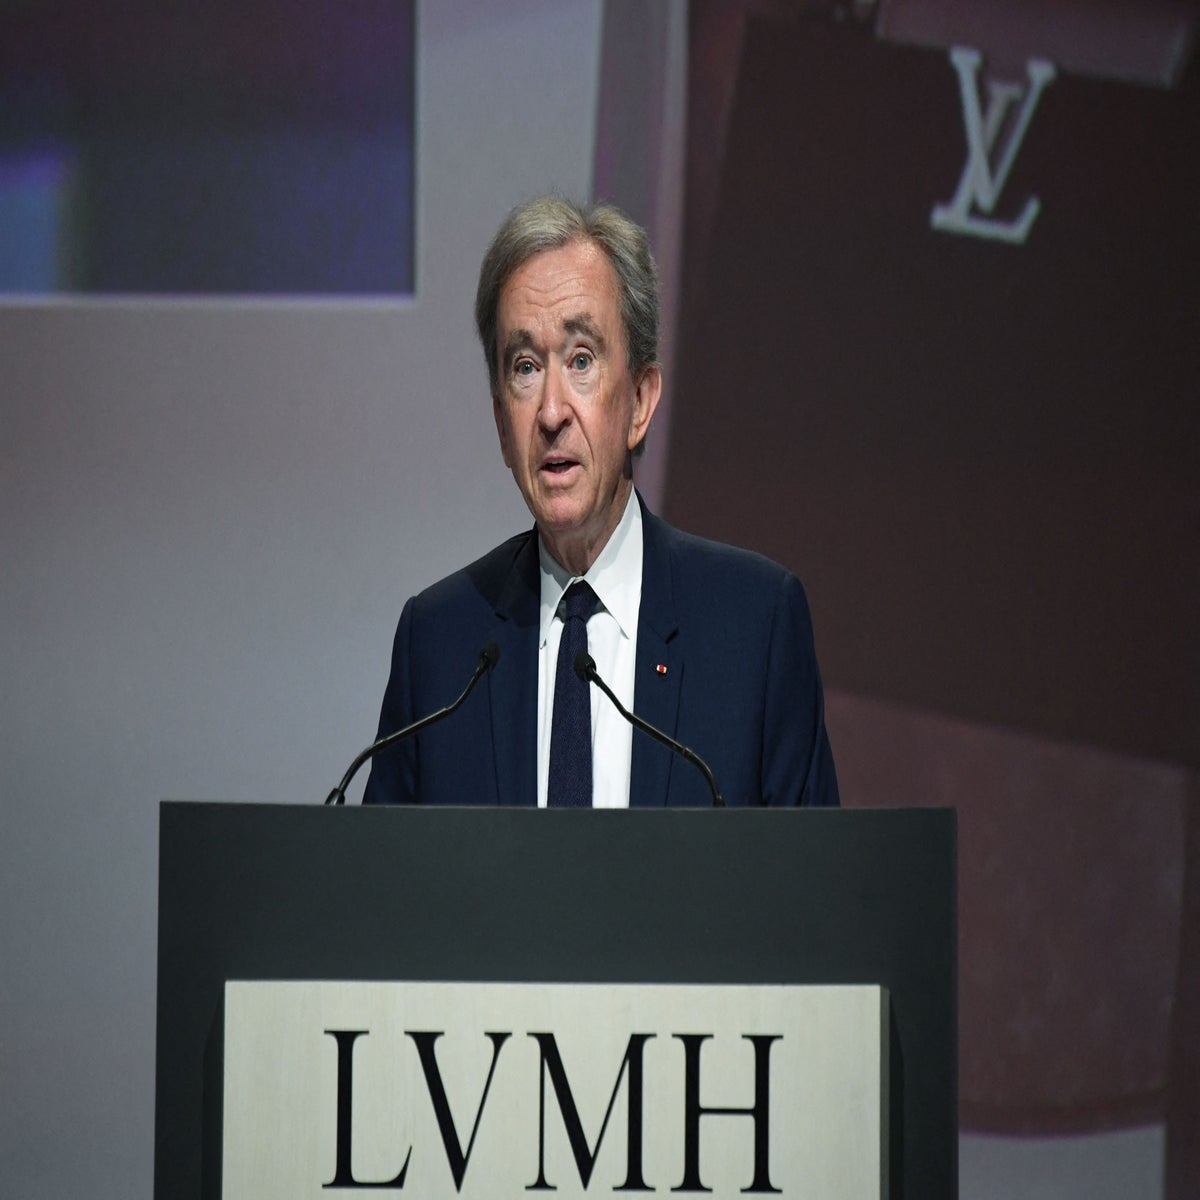 LVMH's Bernard Arnault: The Extraordinary CEO (Europe's richest